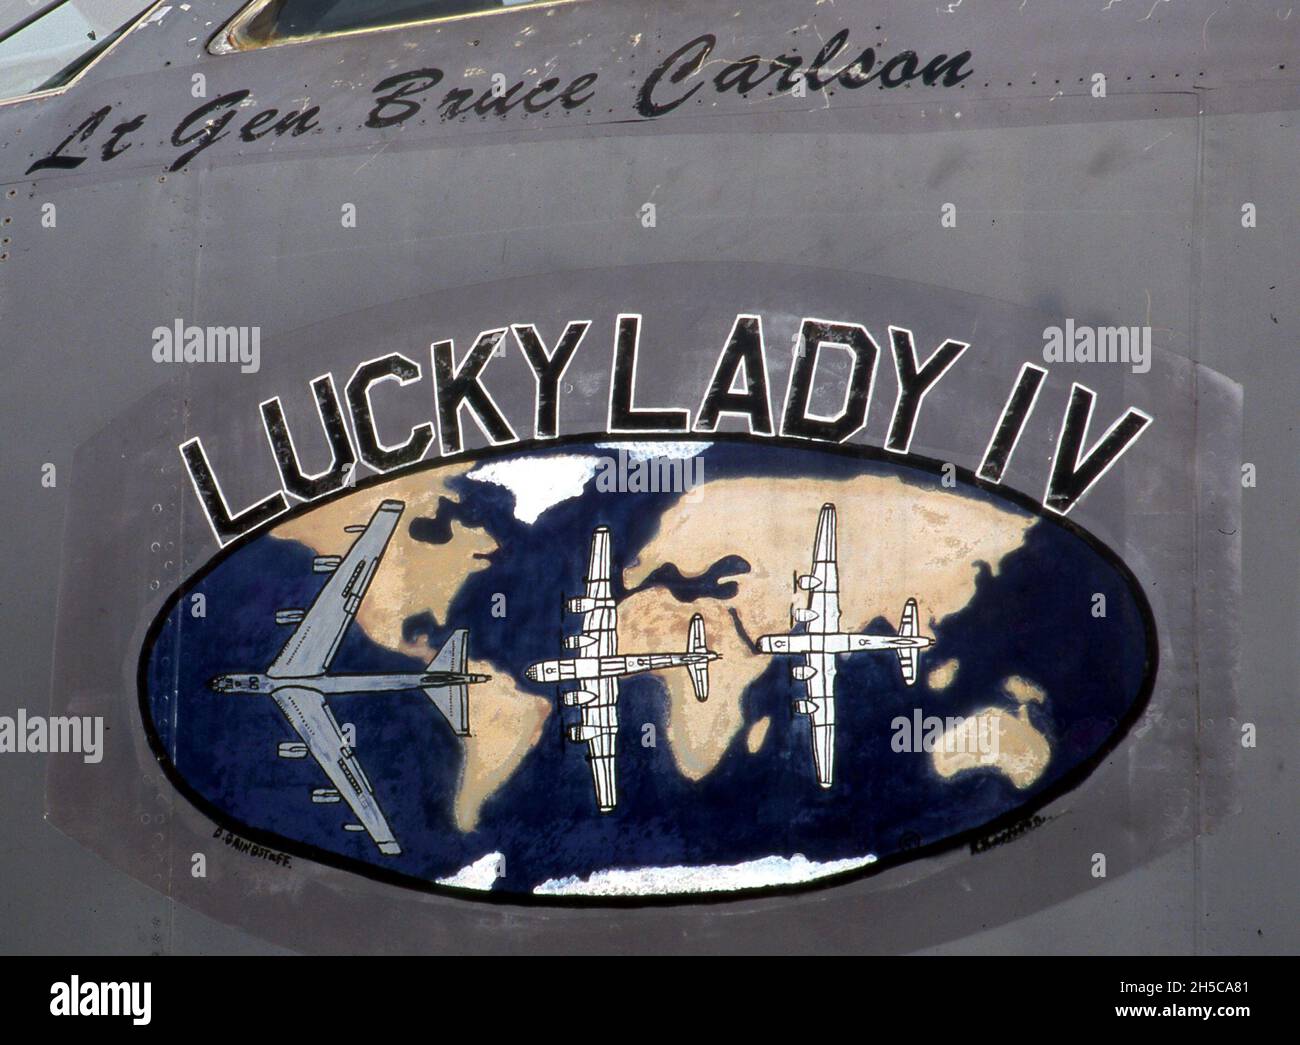 Lucky Lady IV Nose Art on US Military Aircraft Foto de Tony Henshaw Archive Foto de stock